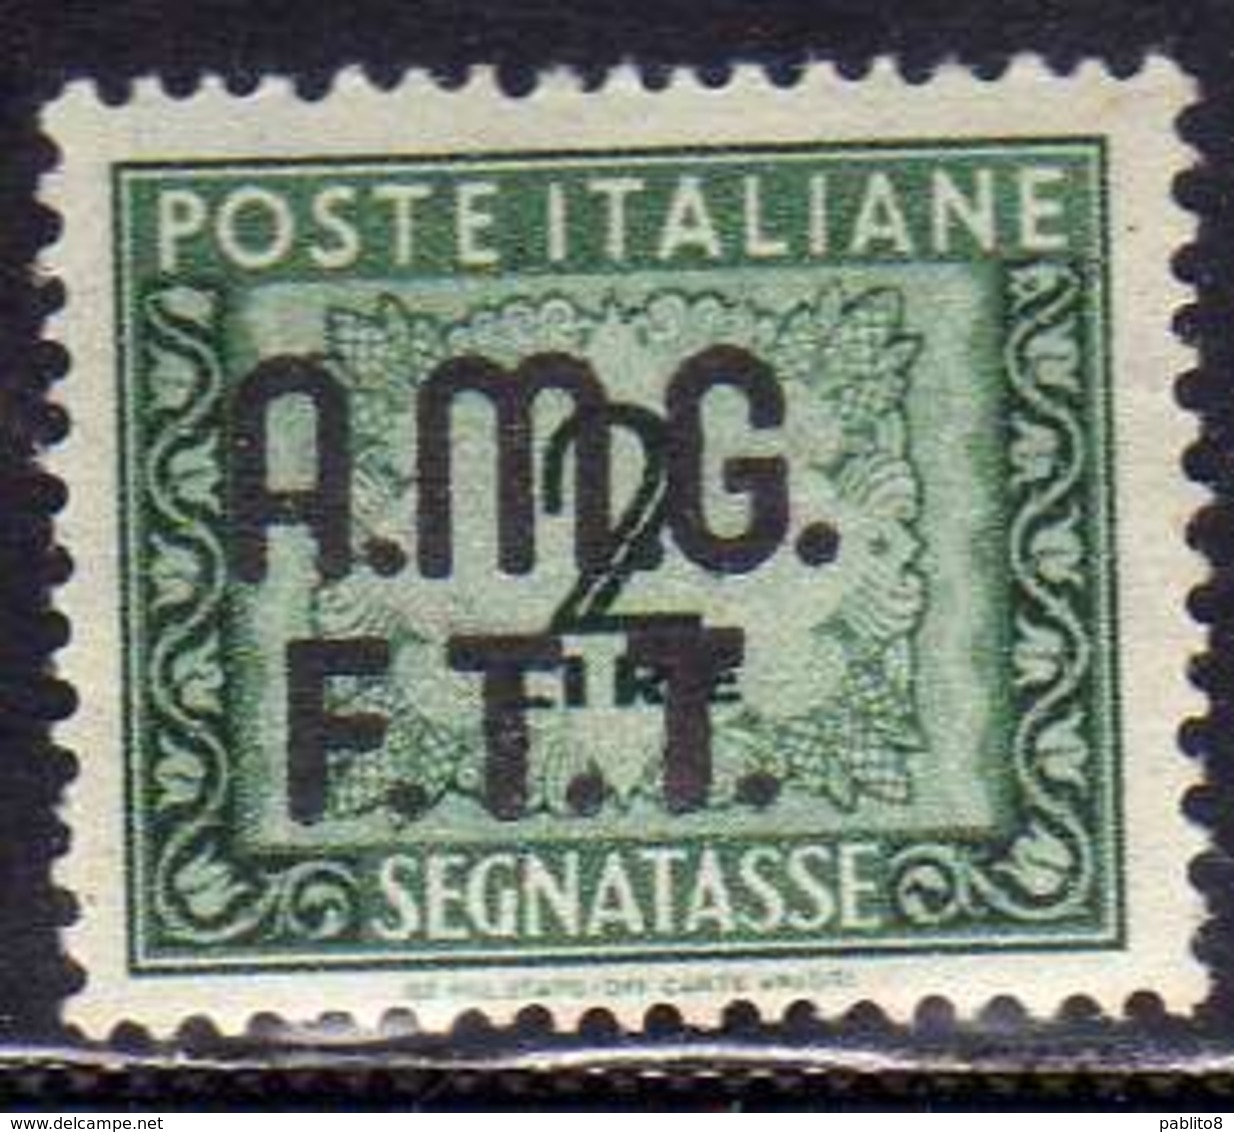 TRIESTE A 1947 - 1949 AMG-FTT SOPRASTAMPATO OVERPRINTED SEGNATASSE TAXES TASSE POSTAGE DUE LIRE 2 MNH - Taxe